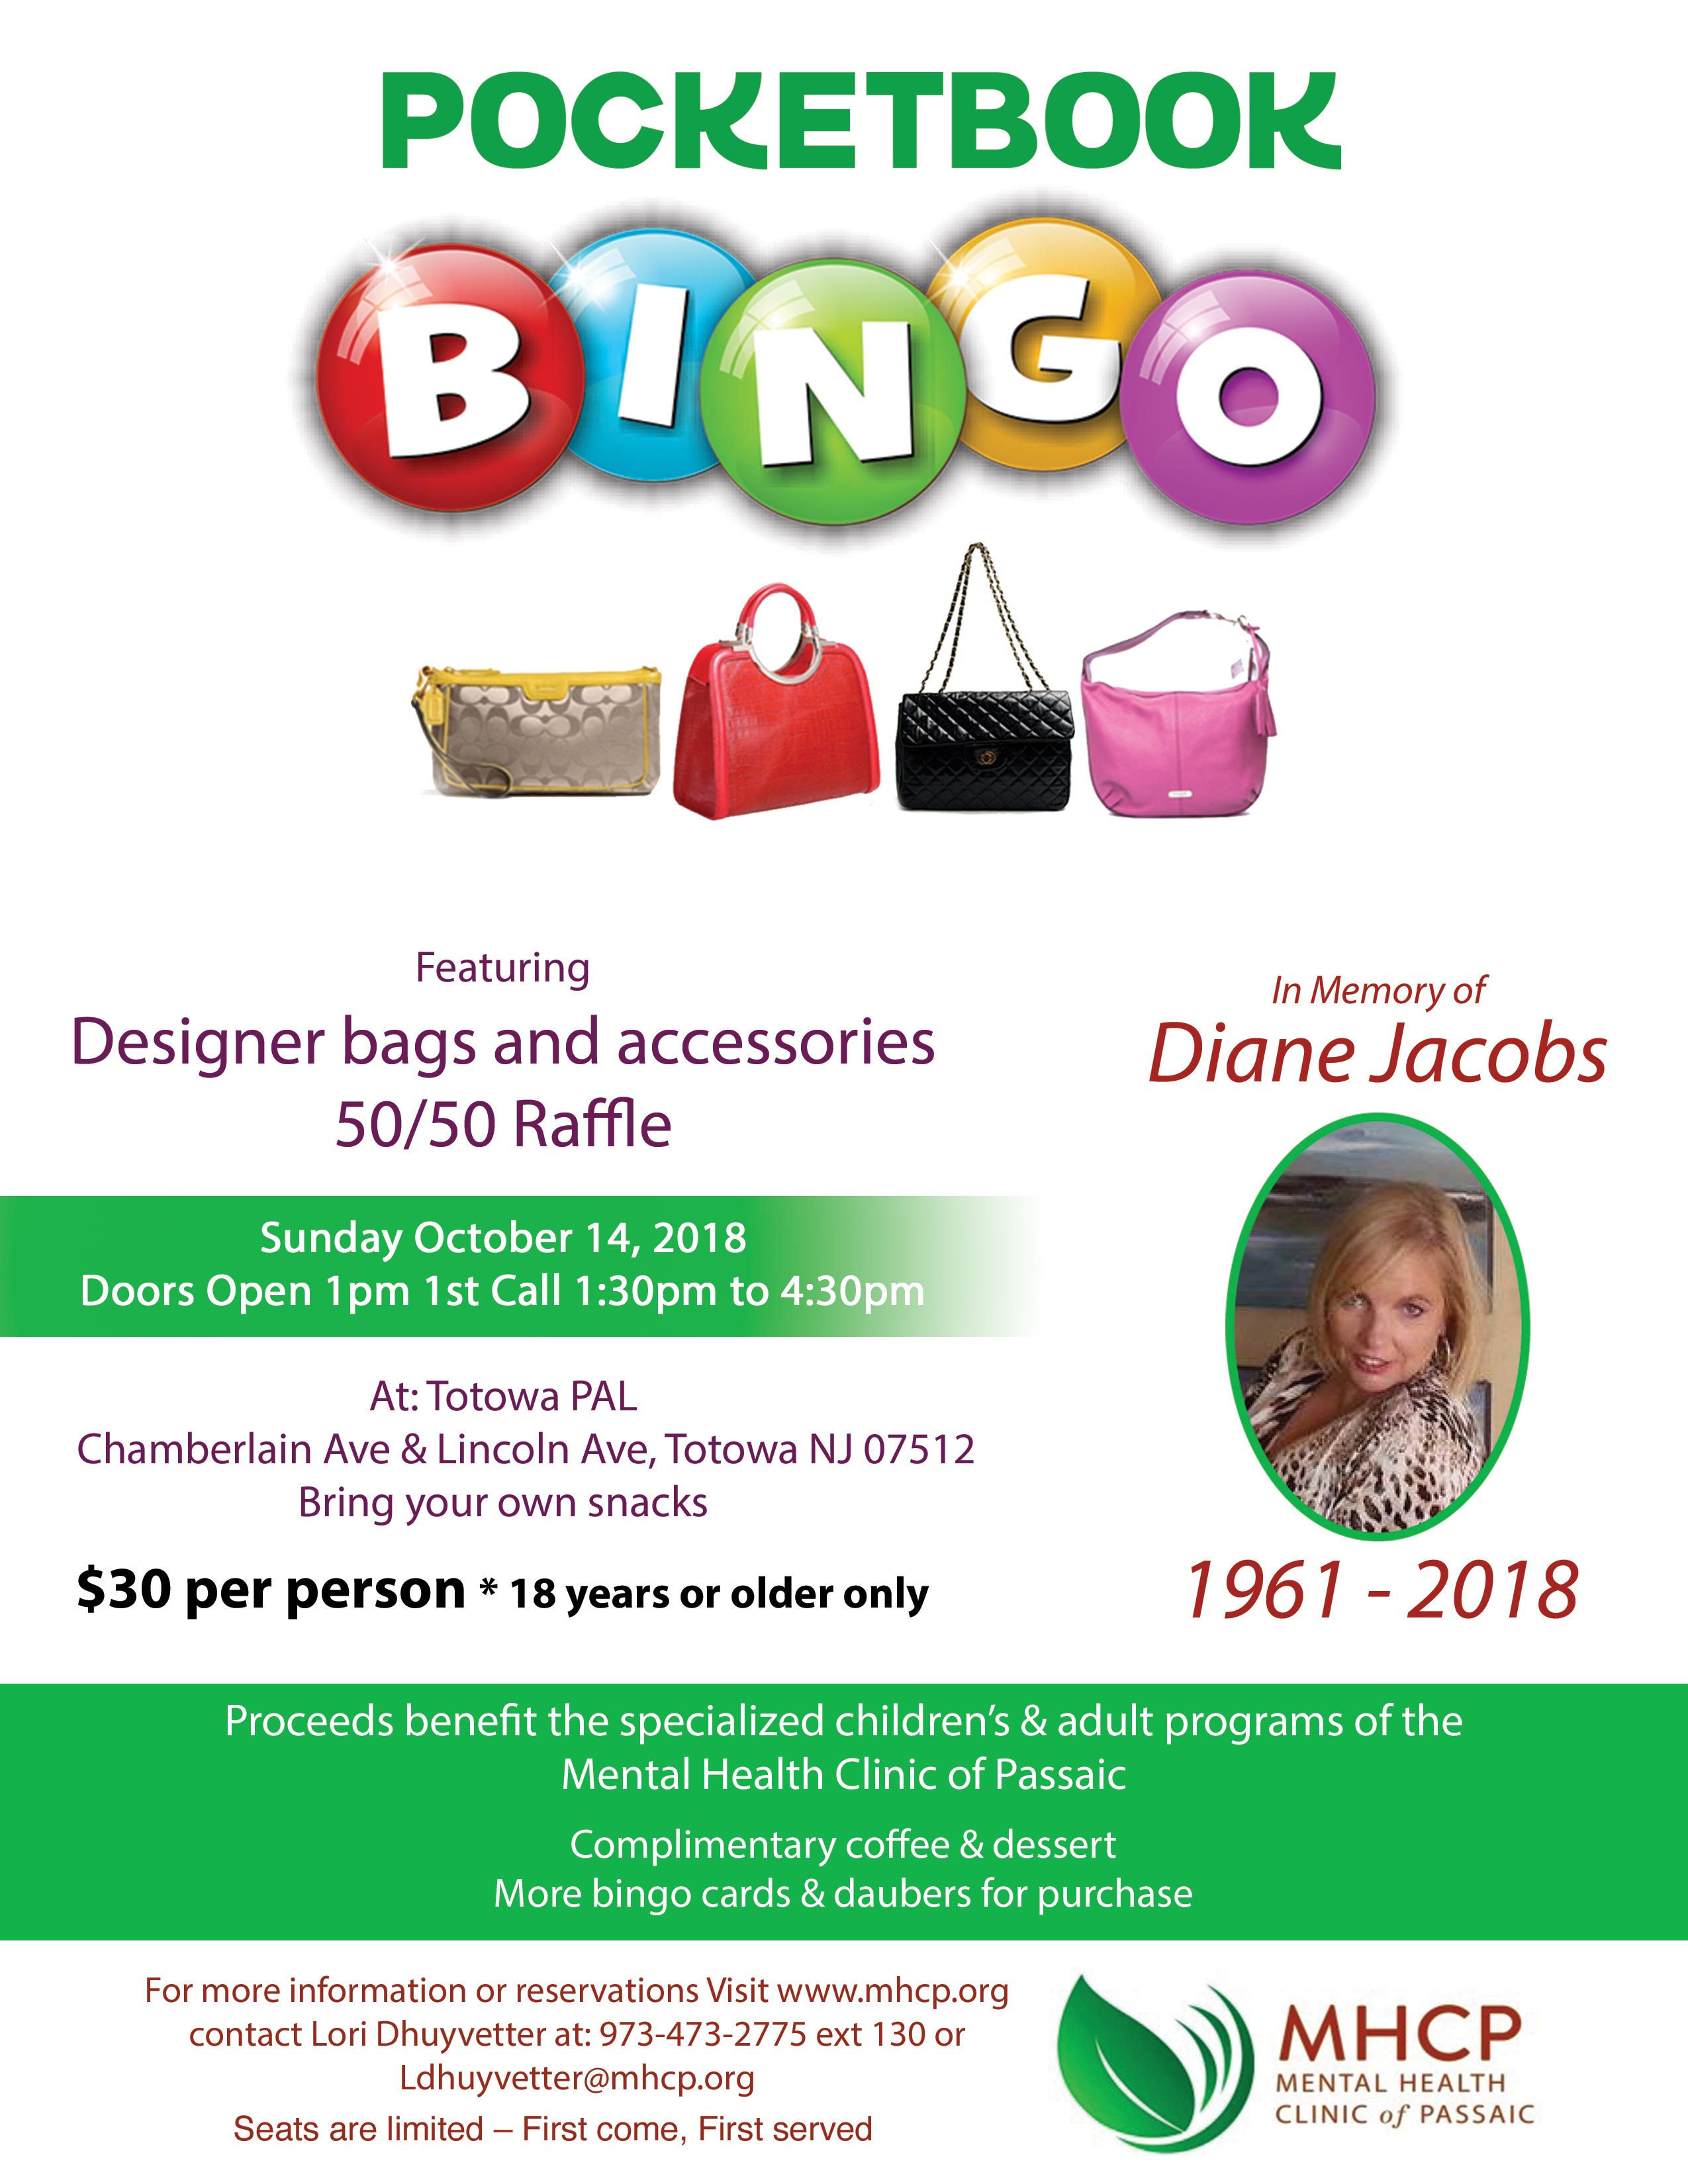 Third Annual Pocketbook Bingo